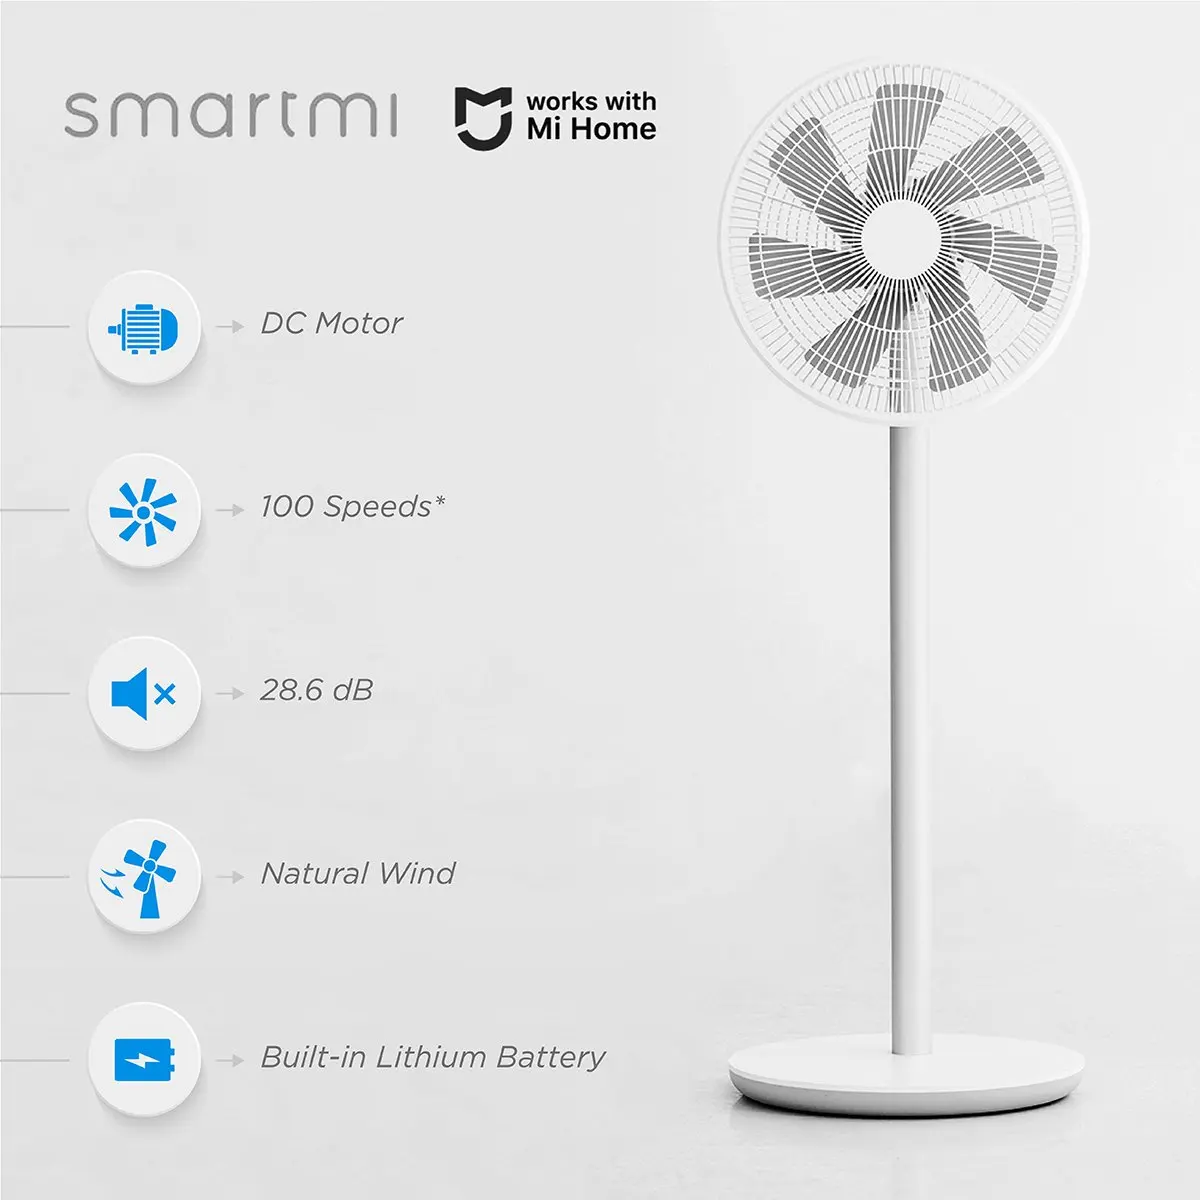 Xiaomi Smartmi Floor Fan 3